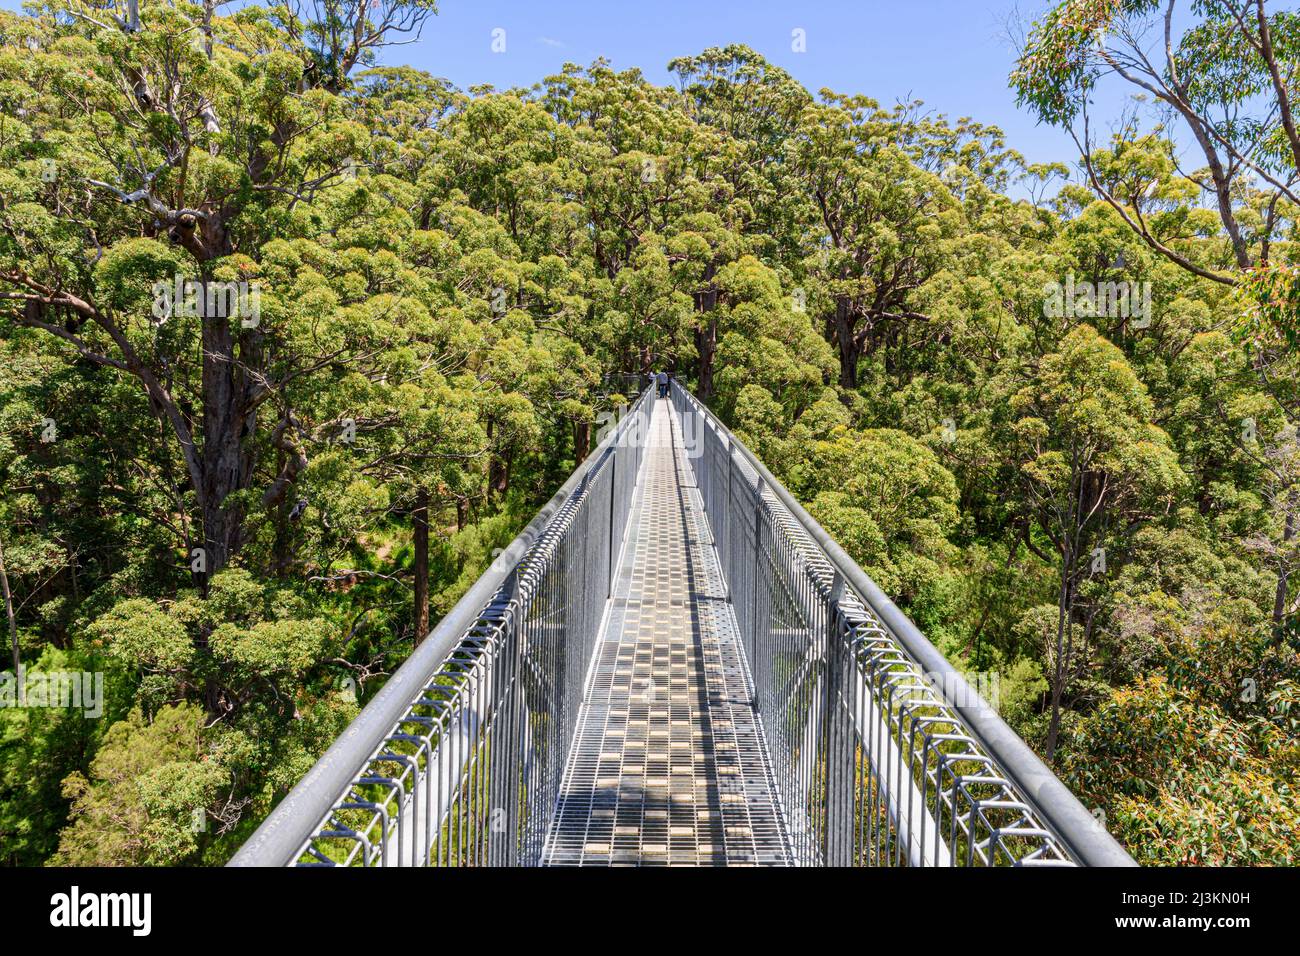 Der Weg zum Valley of the Giants Tree Top Walk führt durch das Red Tingle Forest Canopy, Walpole Nornalup National Park, Western Australia, Australien Stockfoto